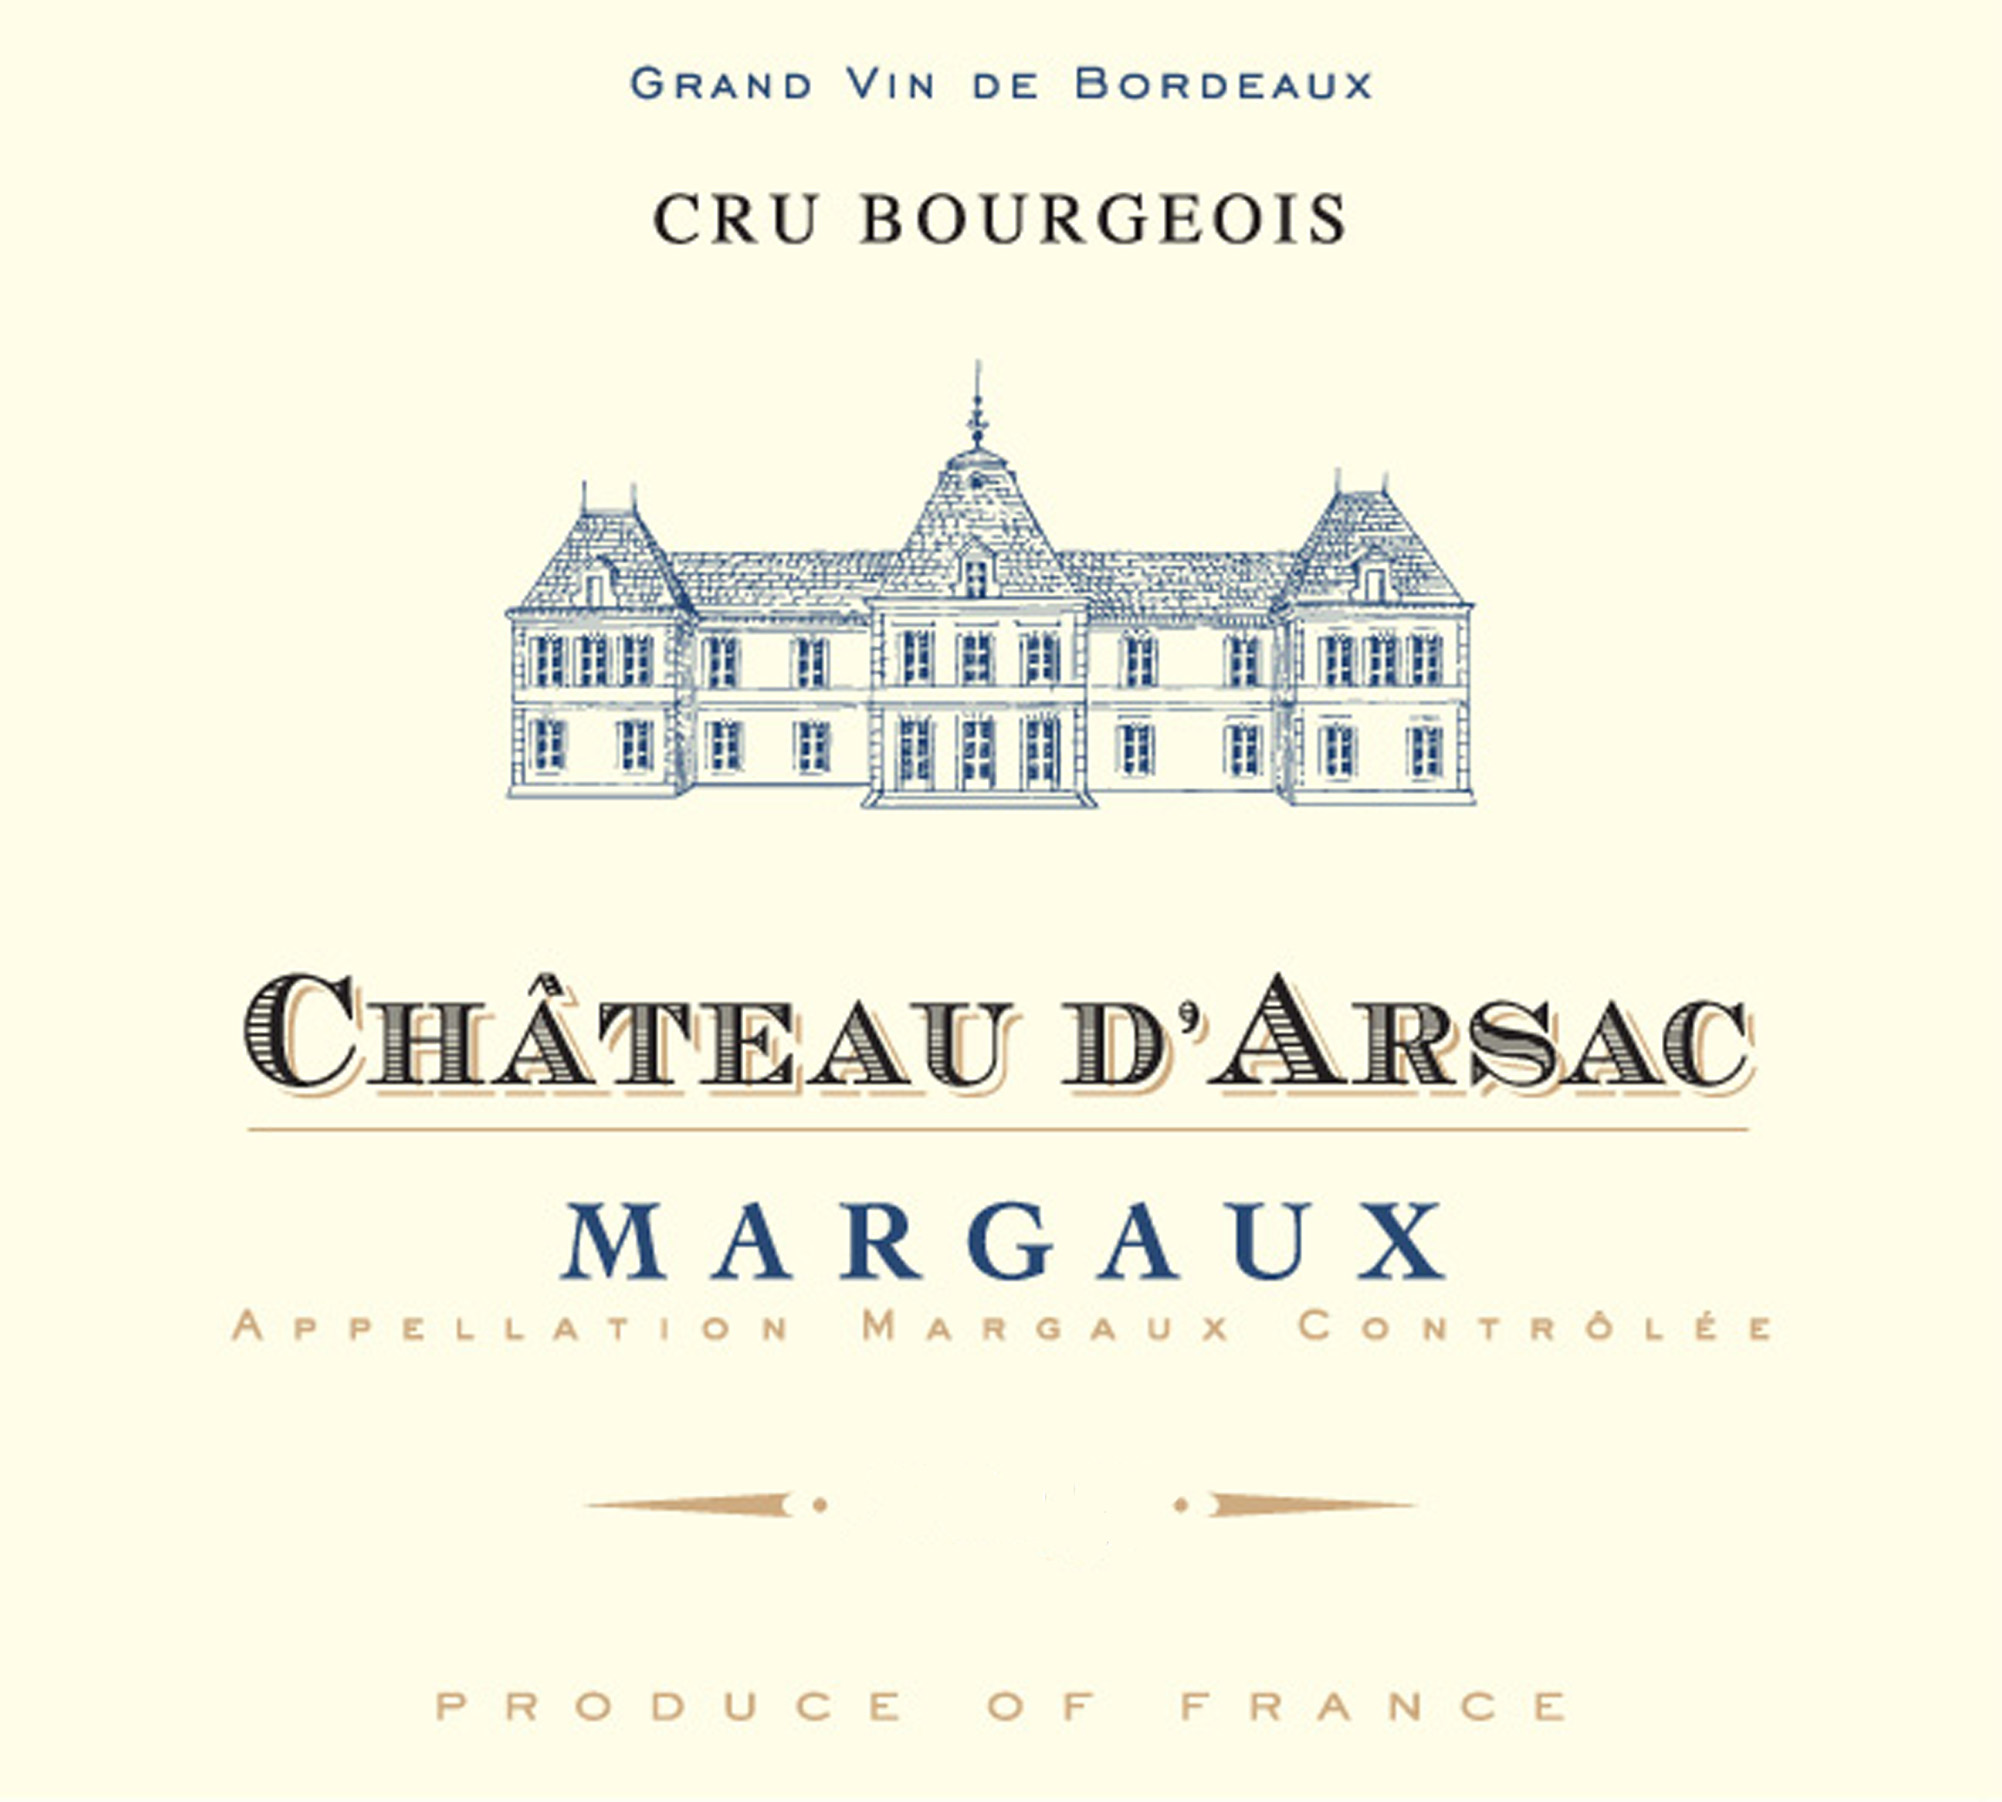 Chateau D'Arsac label